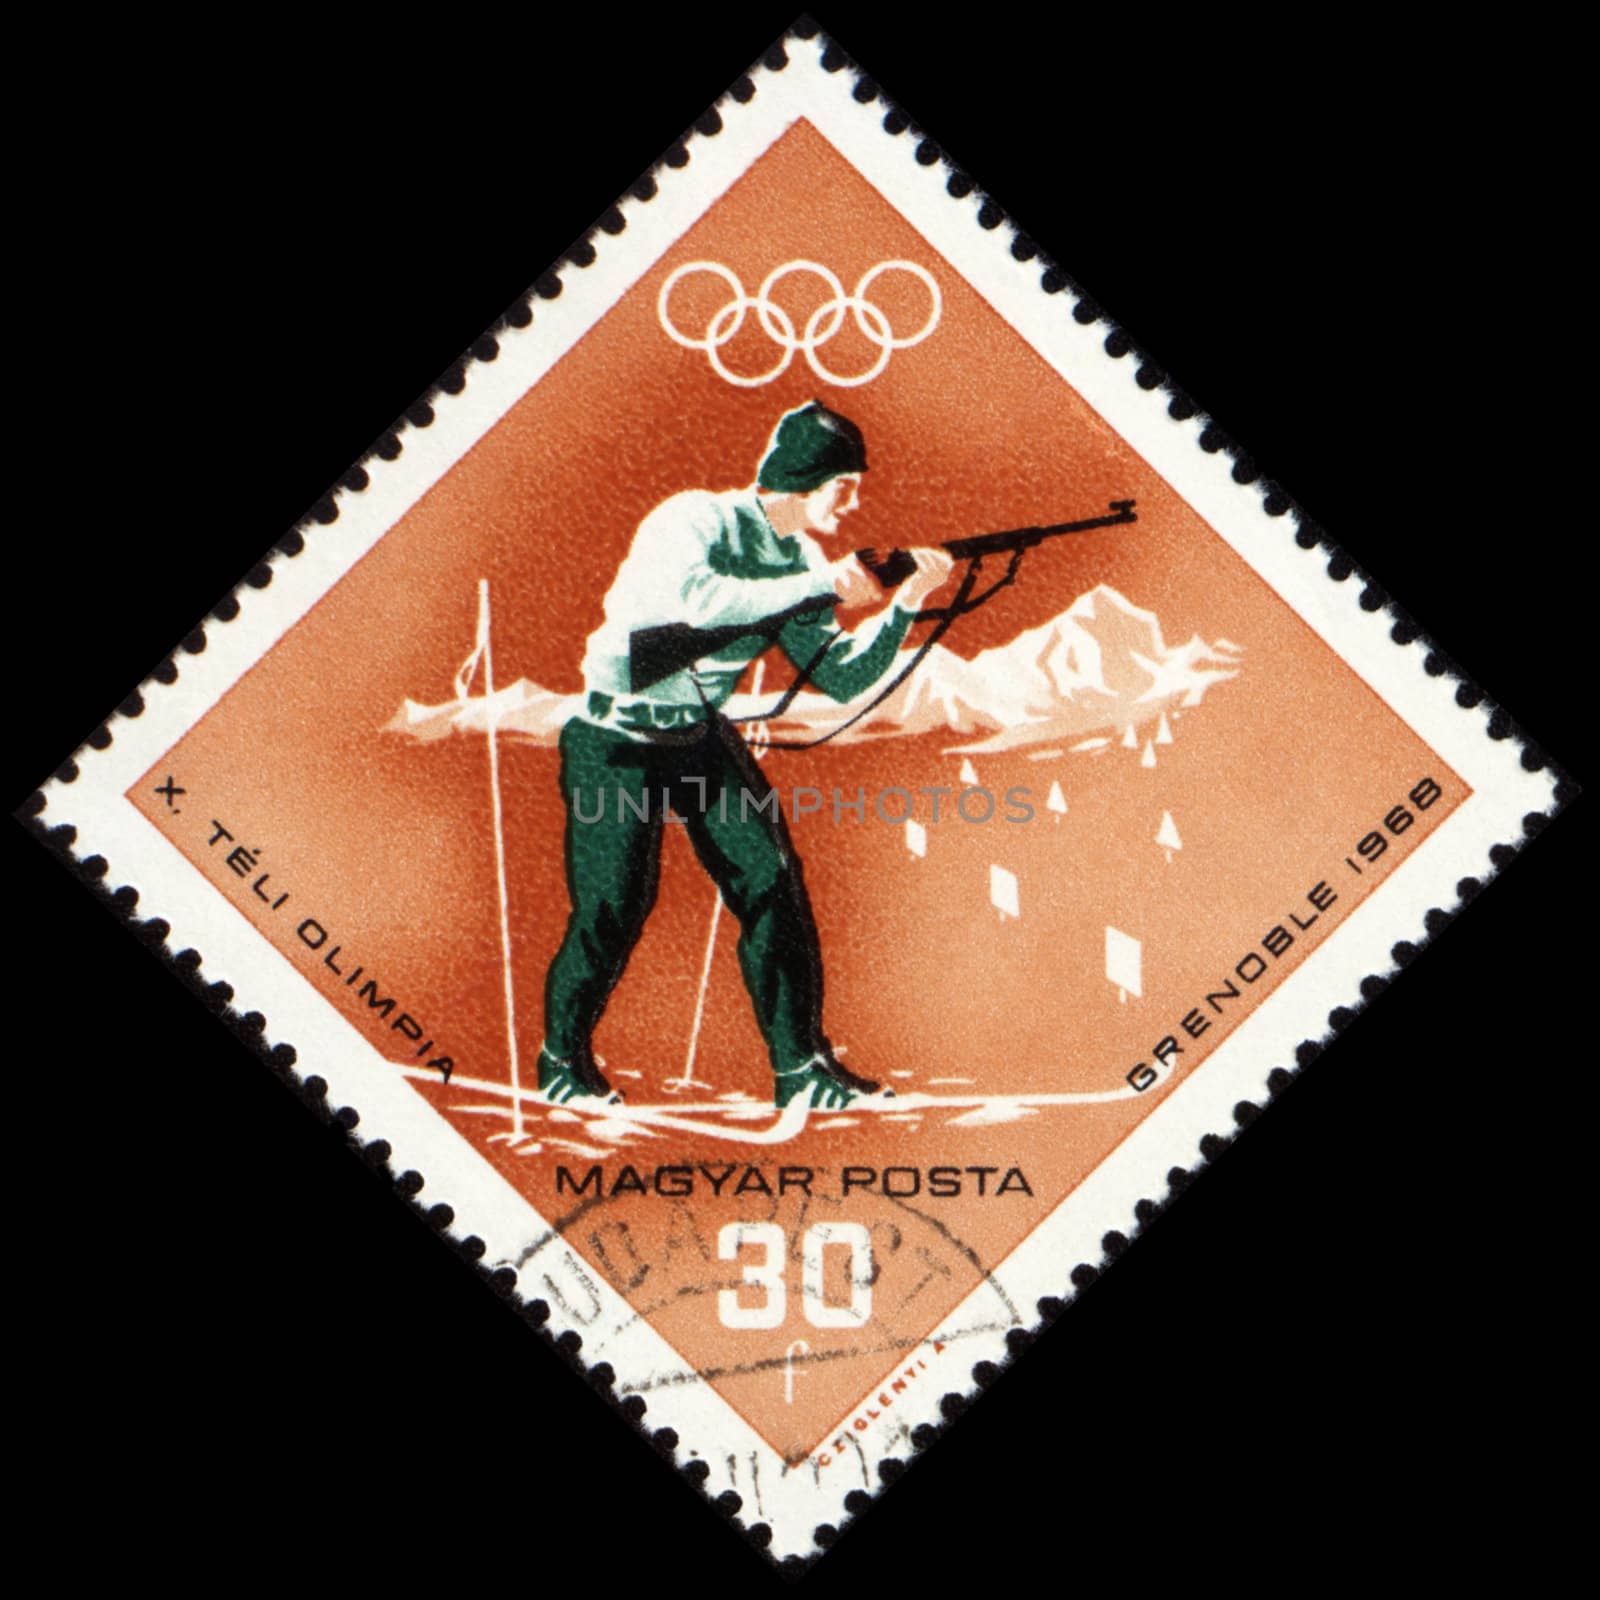 Biathlon on post stamp by wander